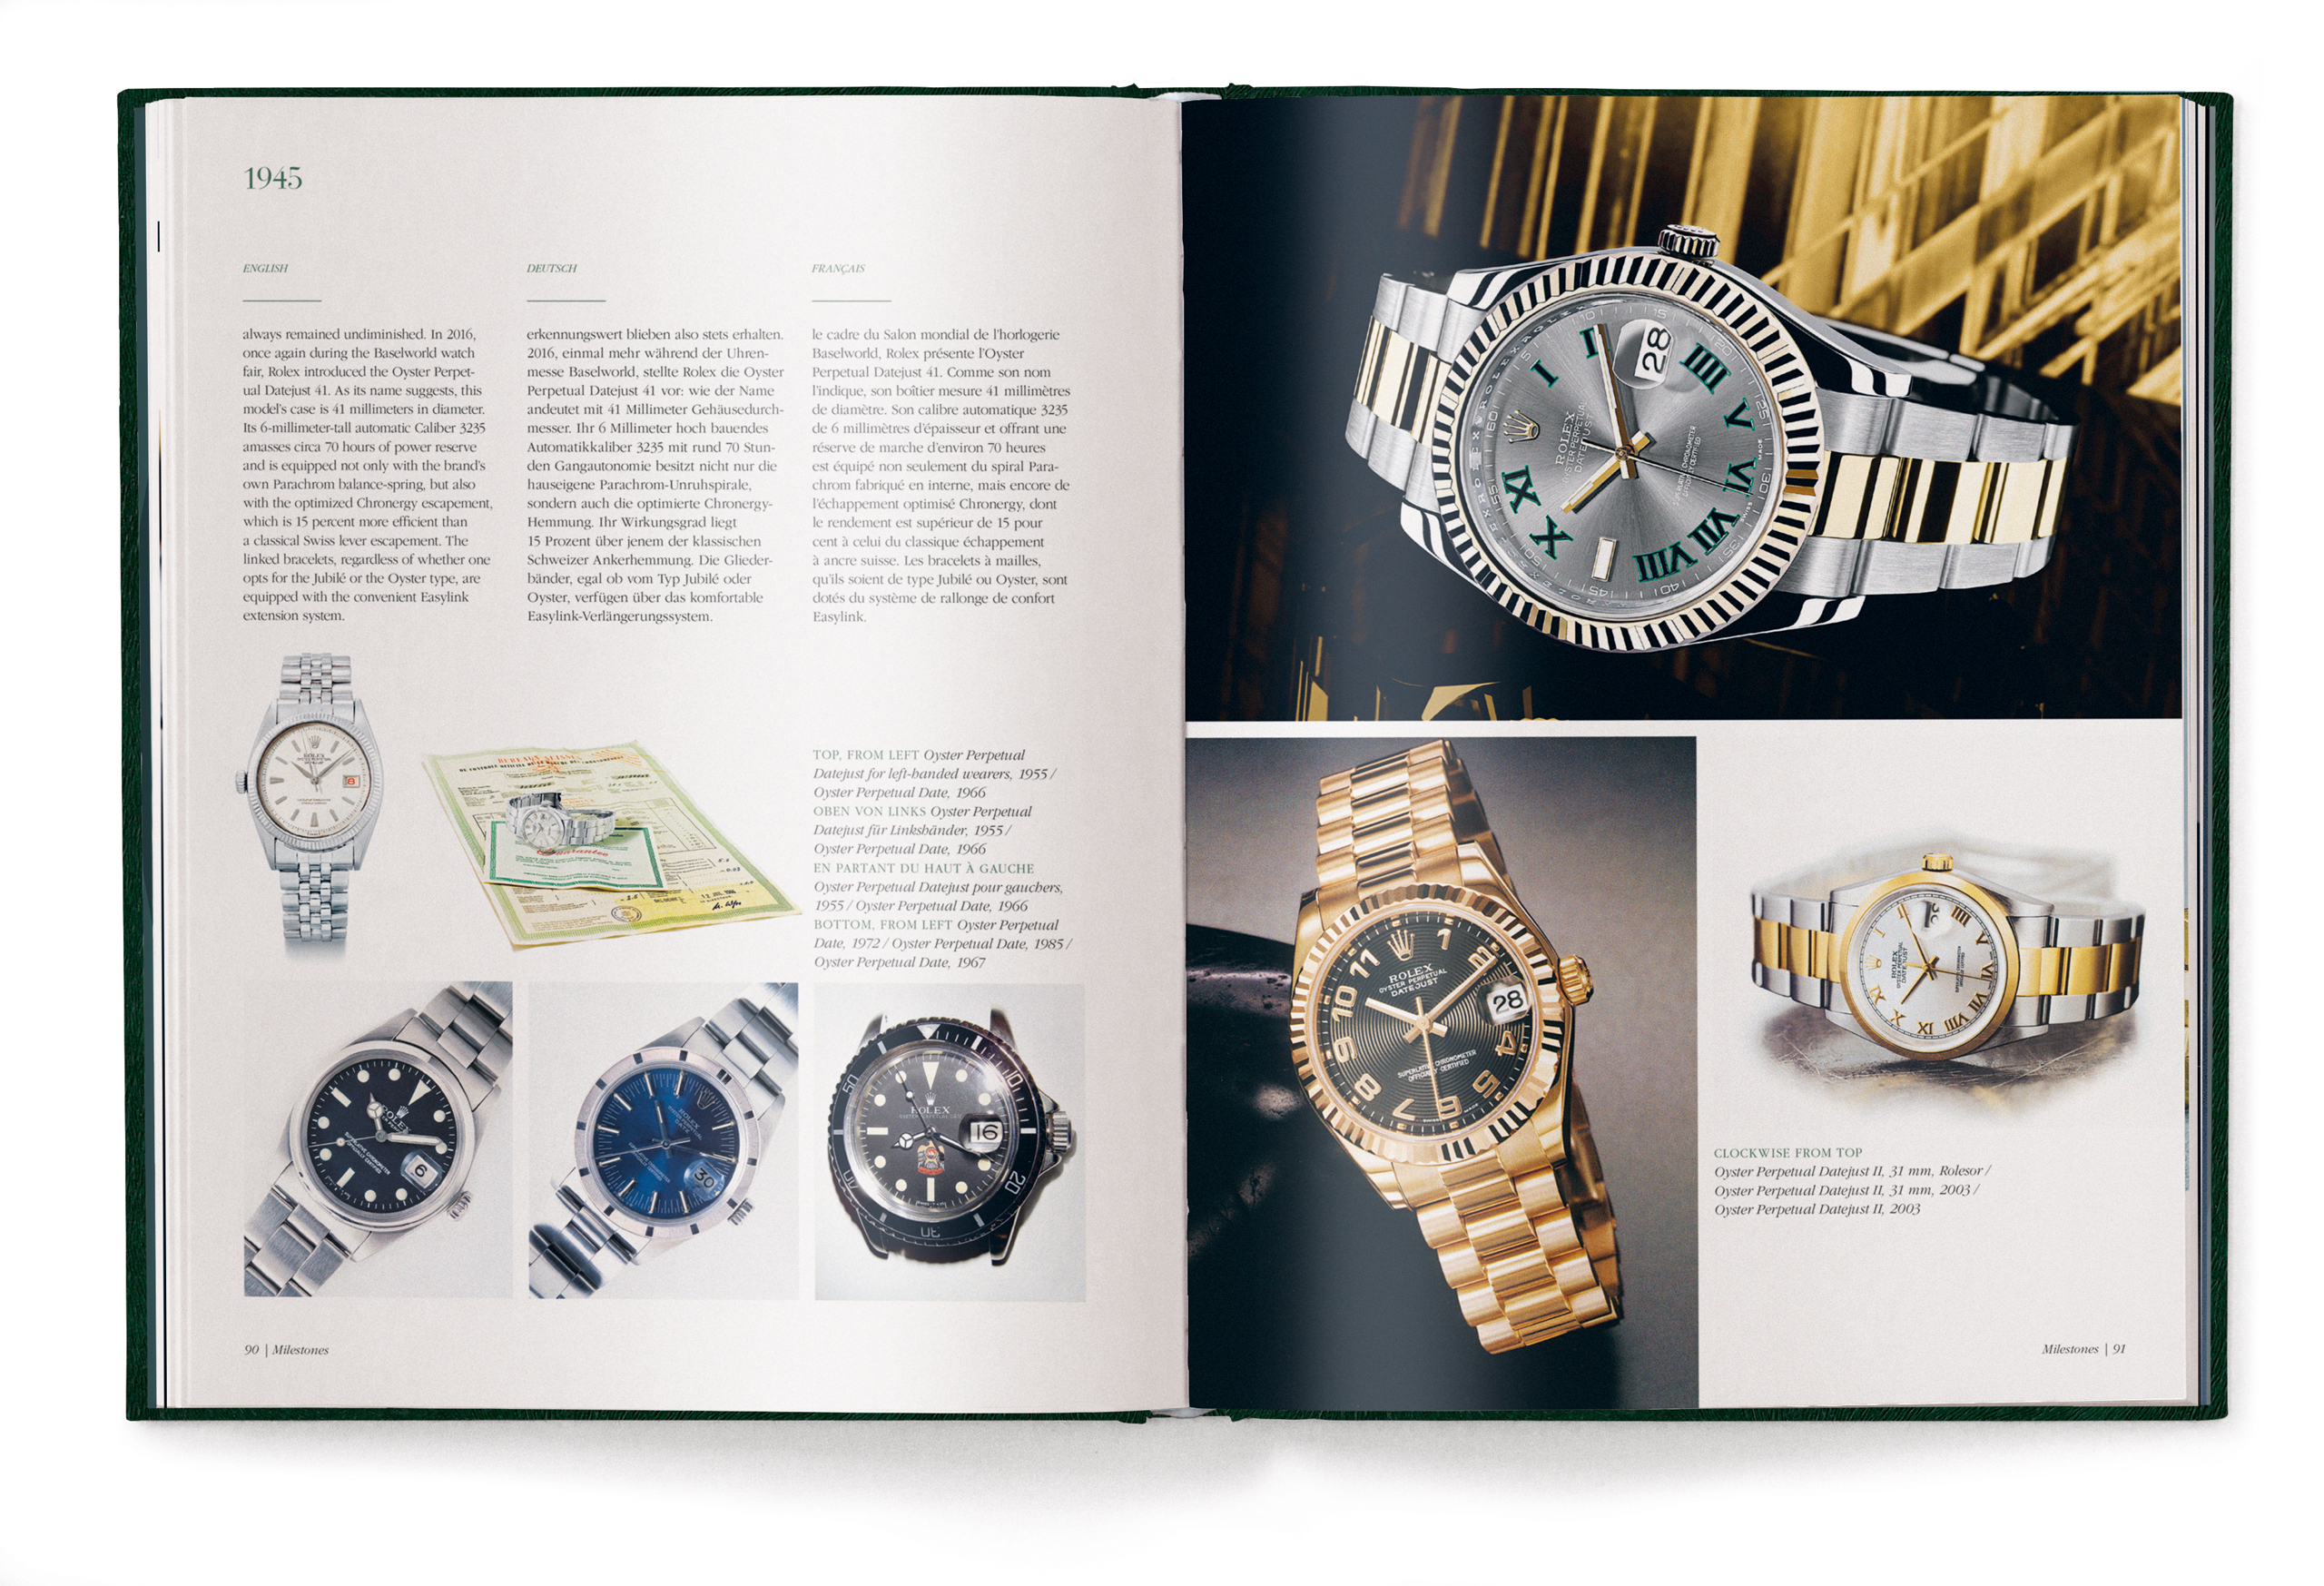  The Watch Book Rolex